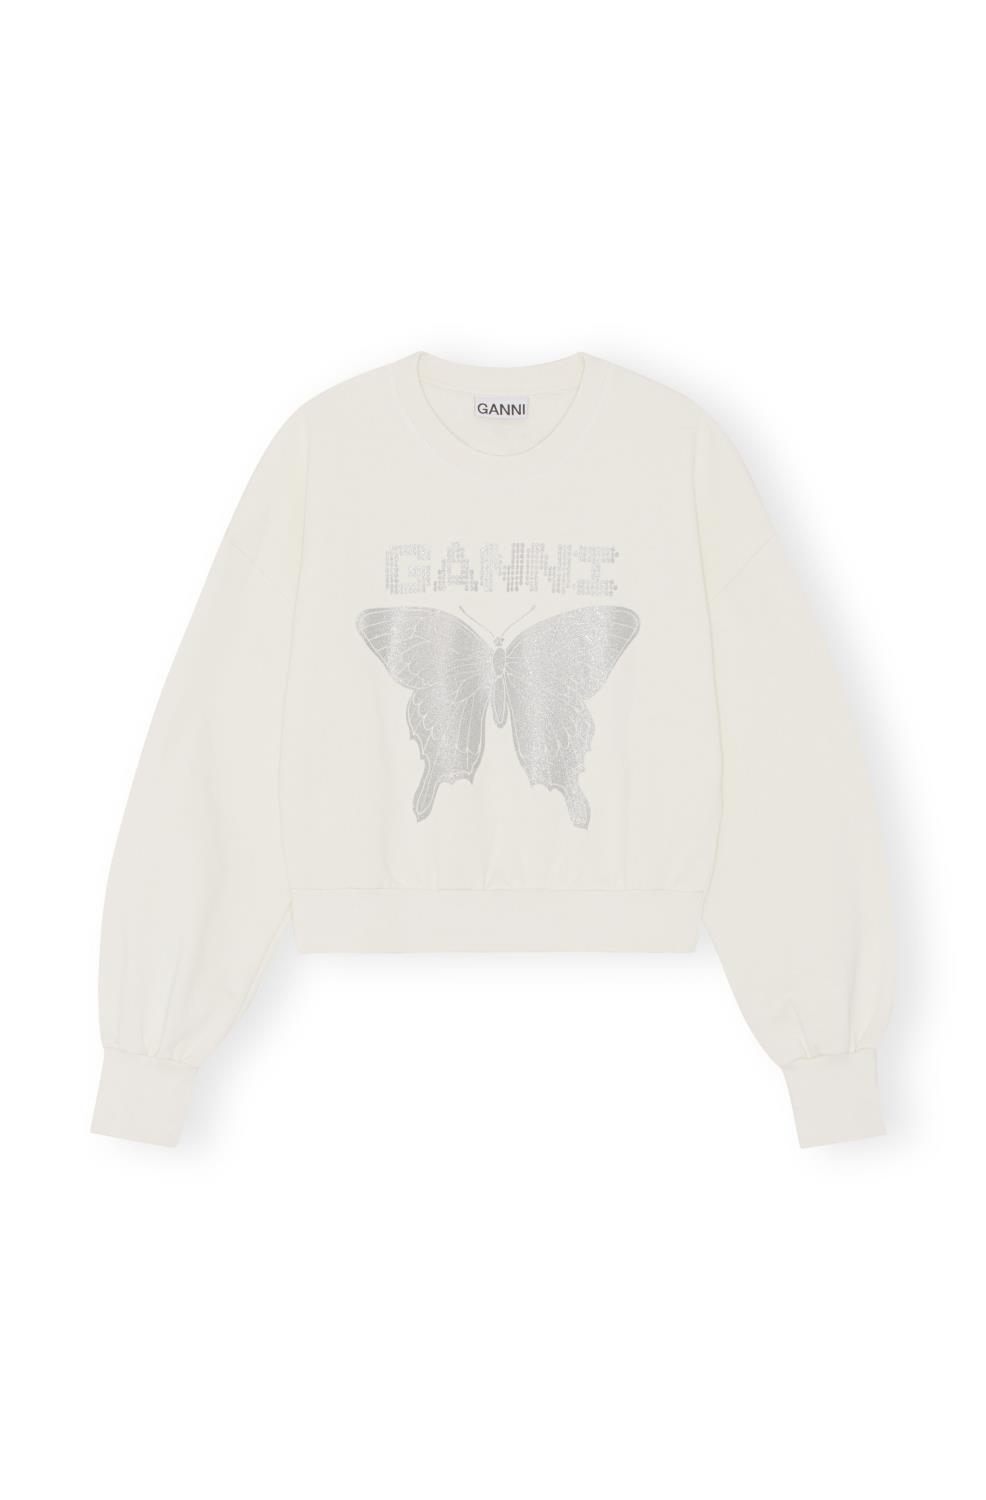 GANNI, Isoli Butterfly Sweatshirt white